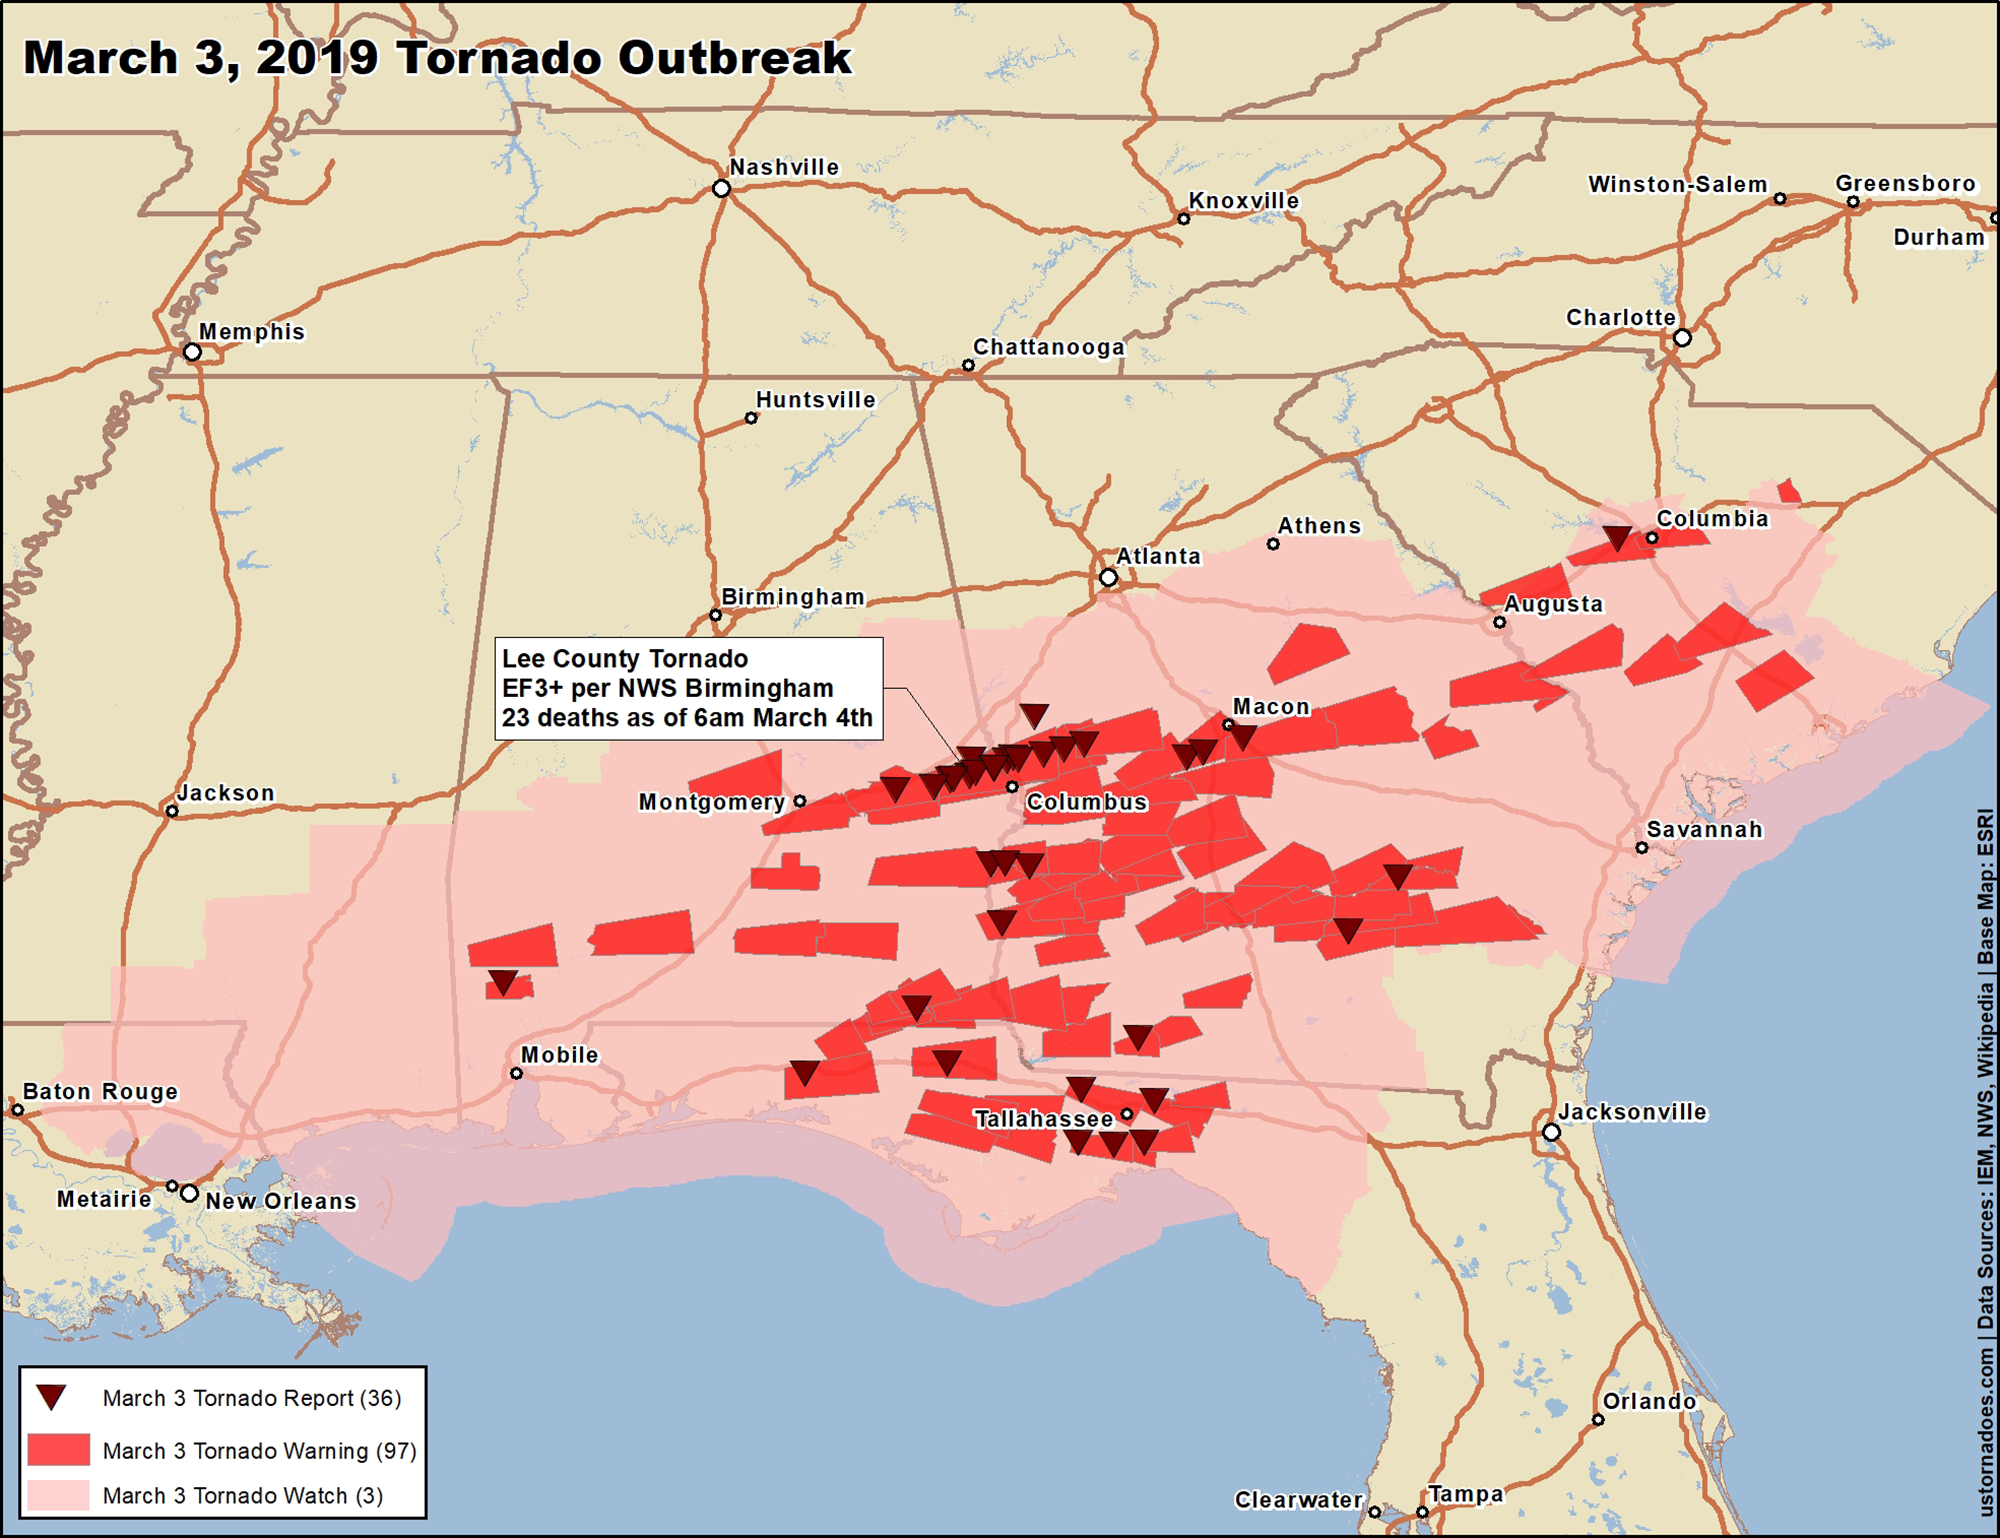 The biggest tornado events of 2019